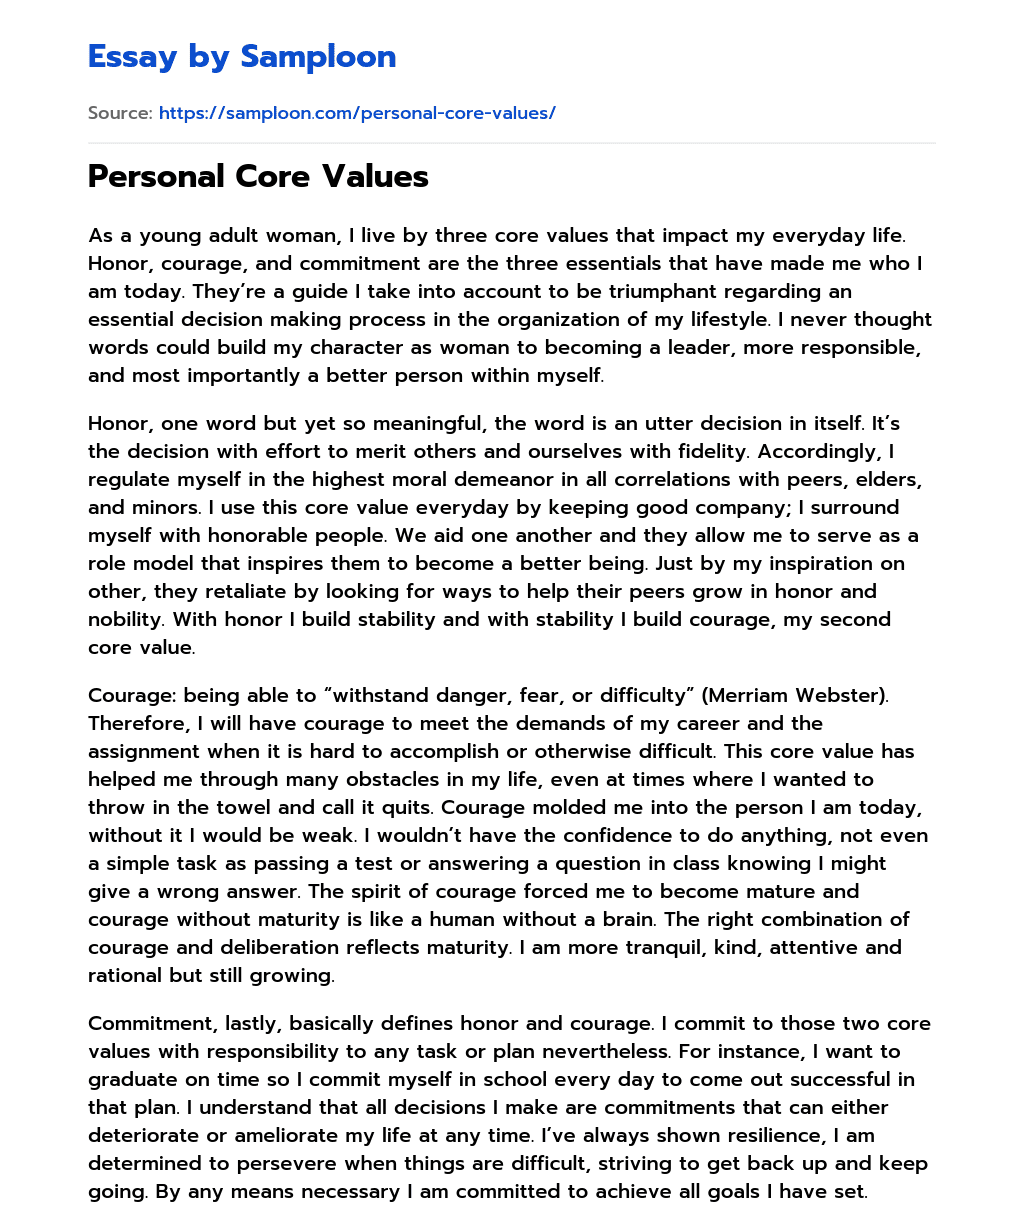 Personal Core Values essay